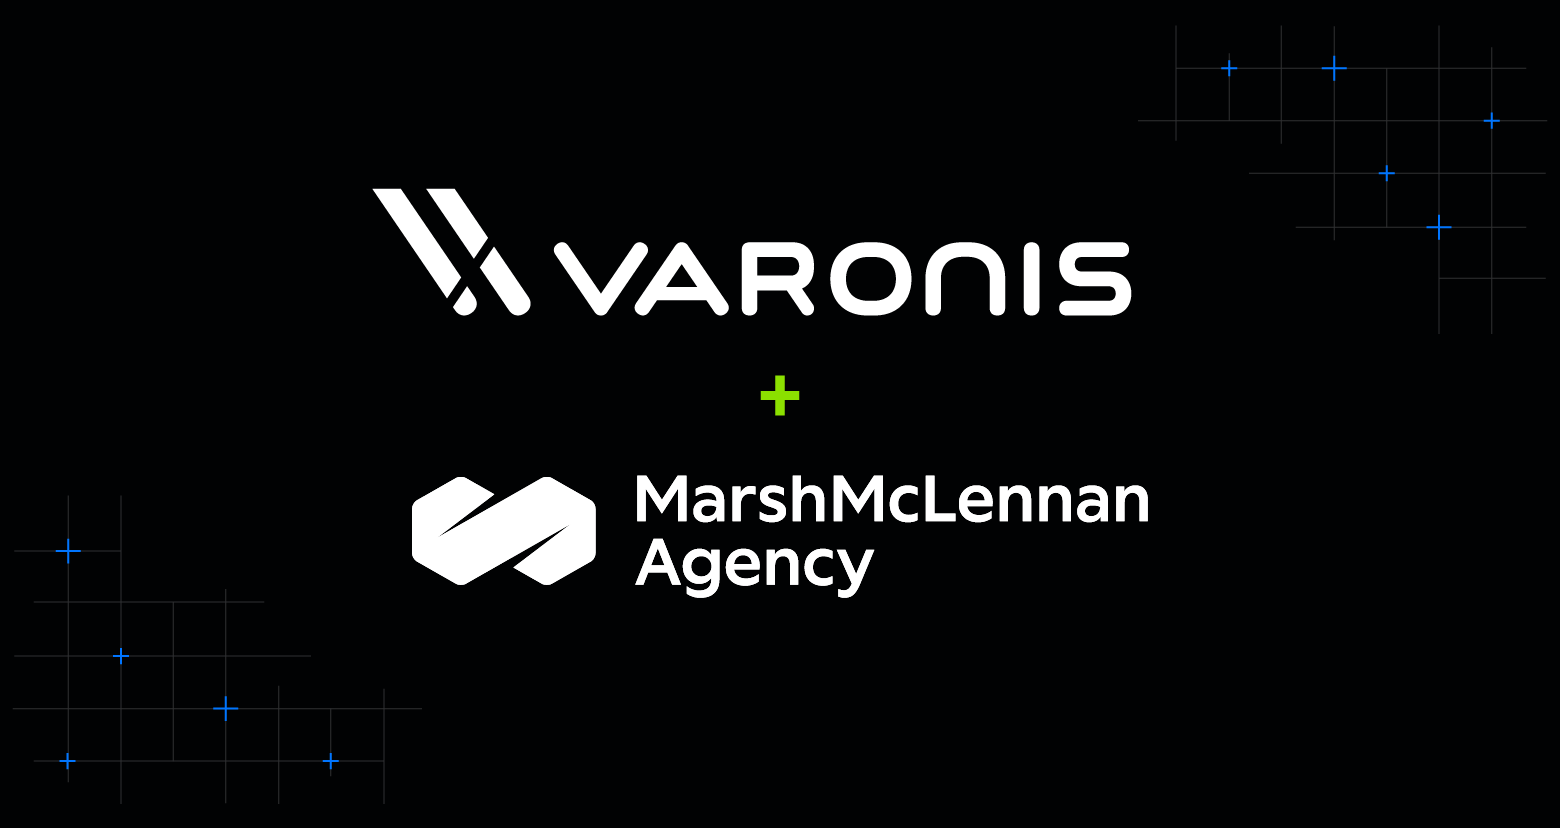 Varonis logo and MarshMcLennan Agency logo